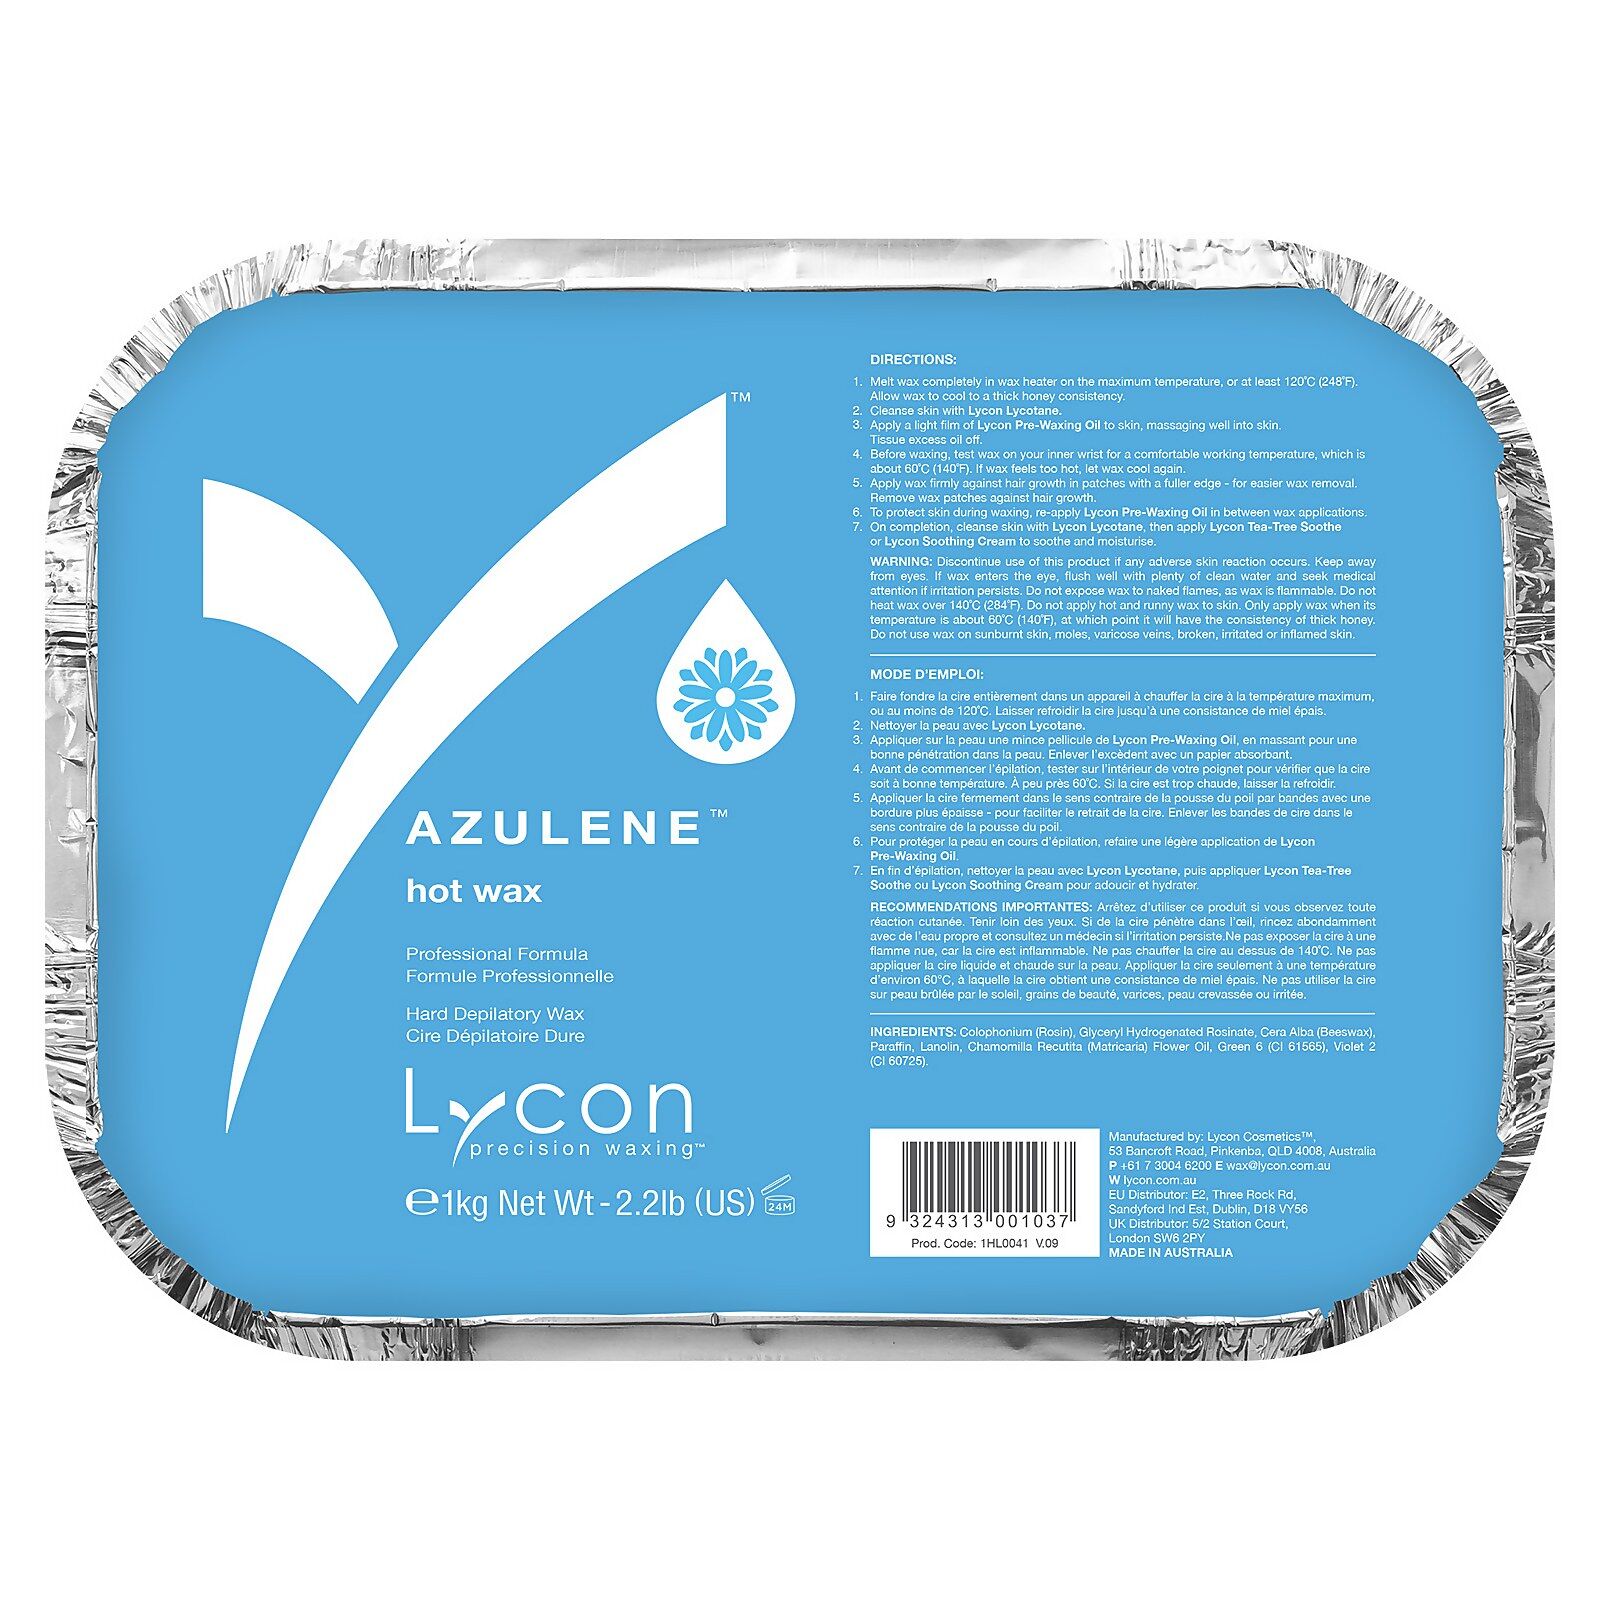 Lycon Azulene Hot Wax 1kg